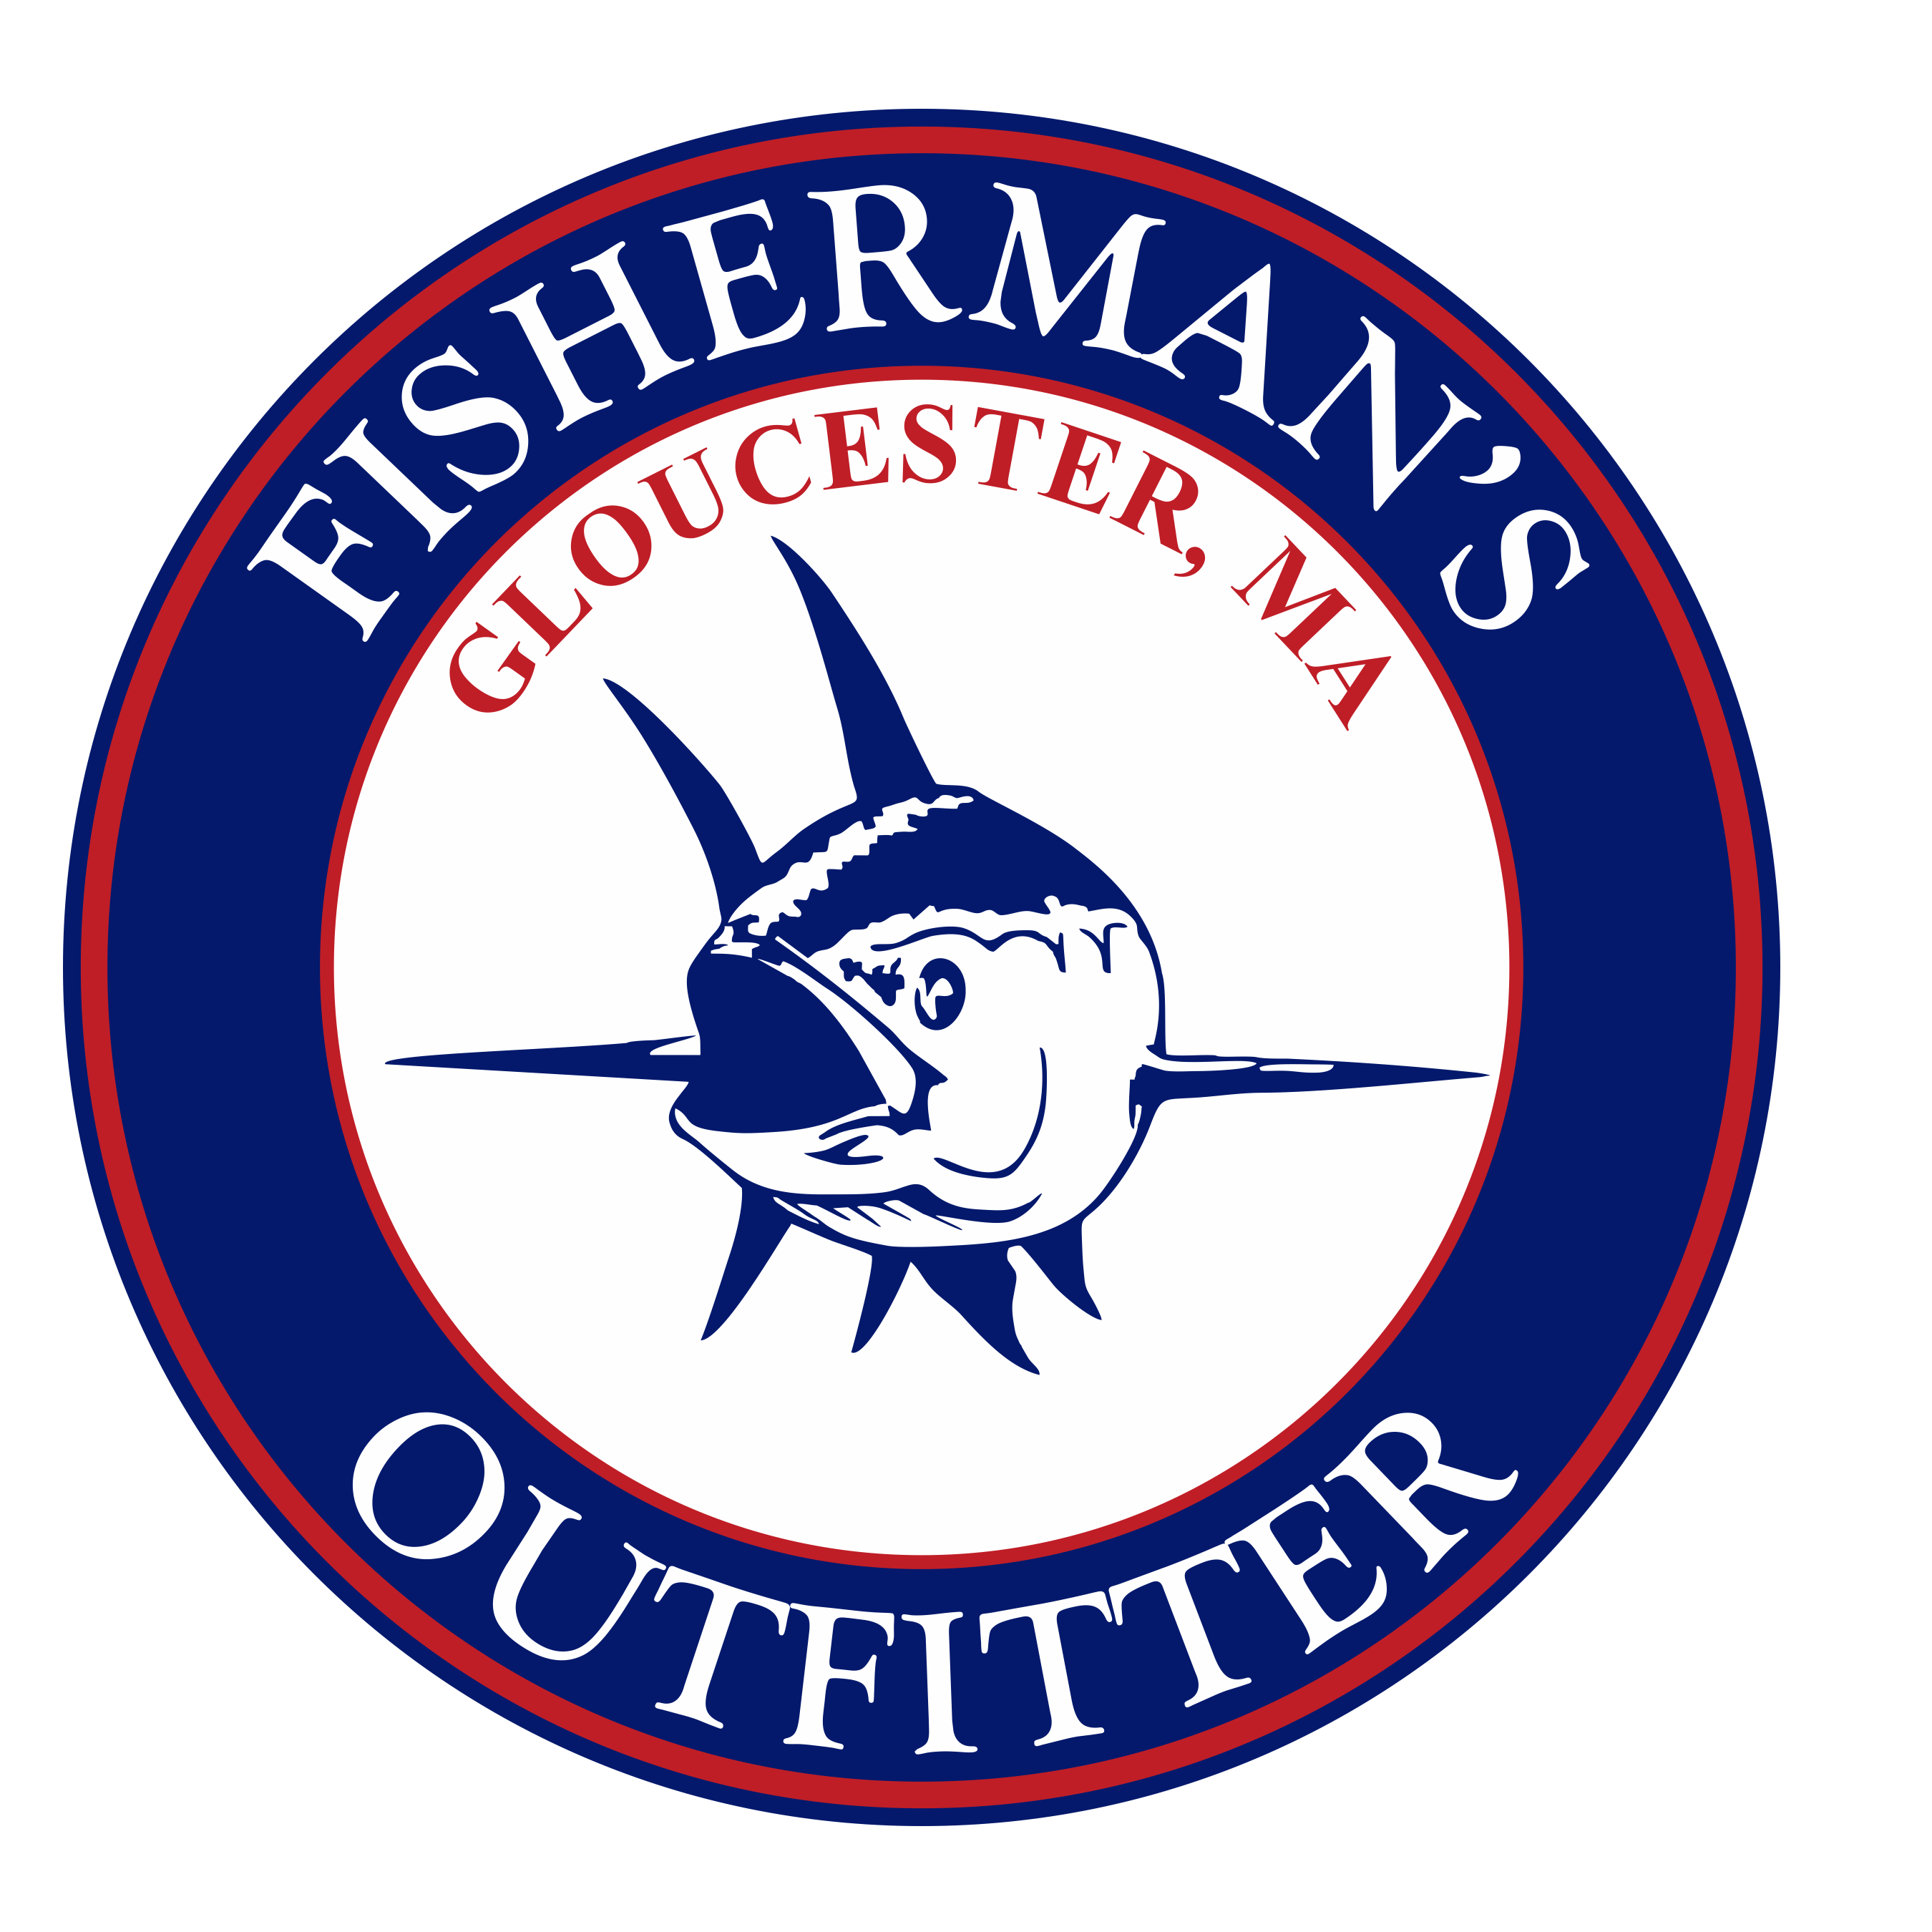 Cuda 120 Fish Measuring Tape - Fisherman's Outfitter